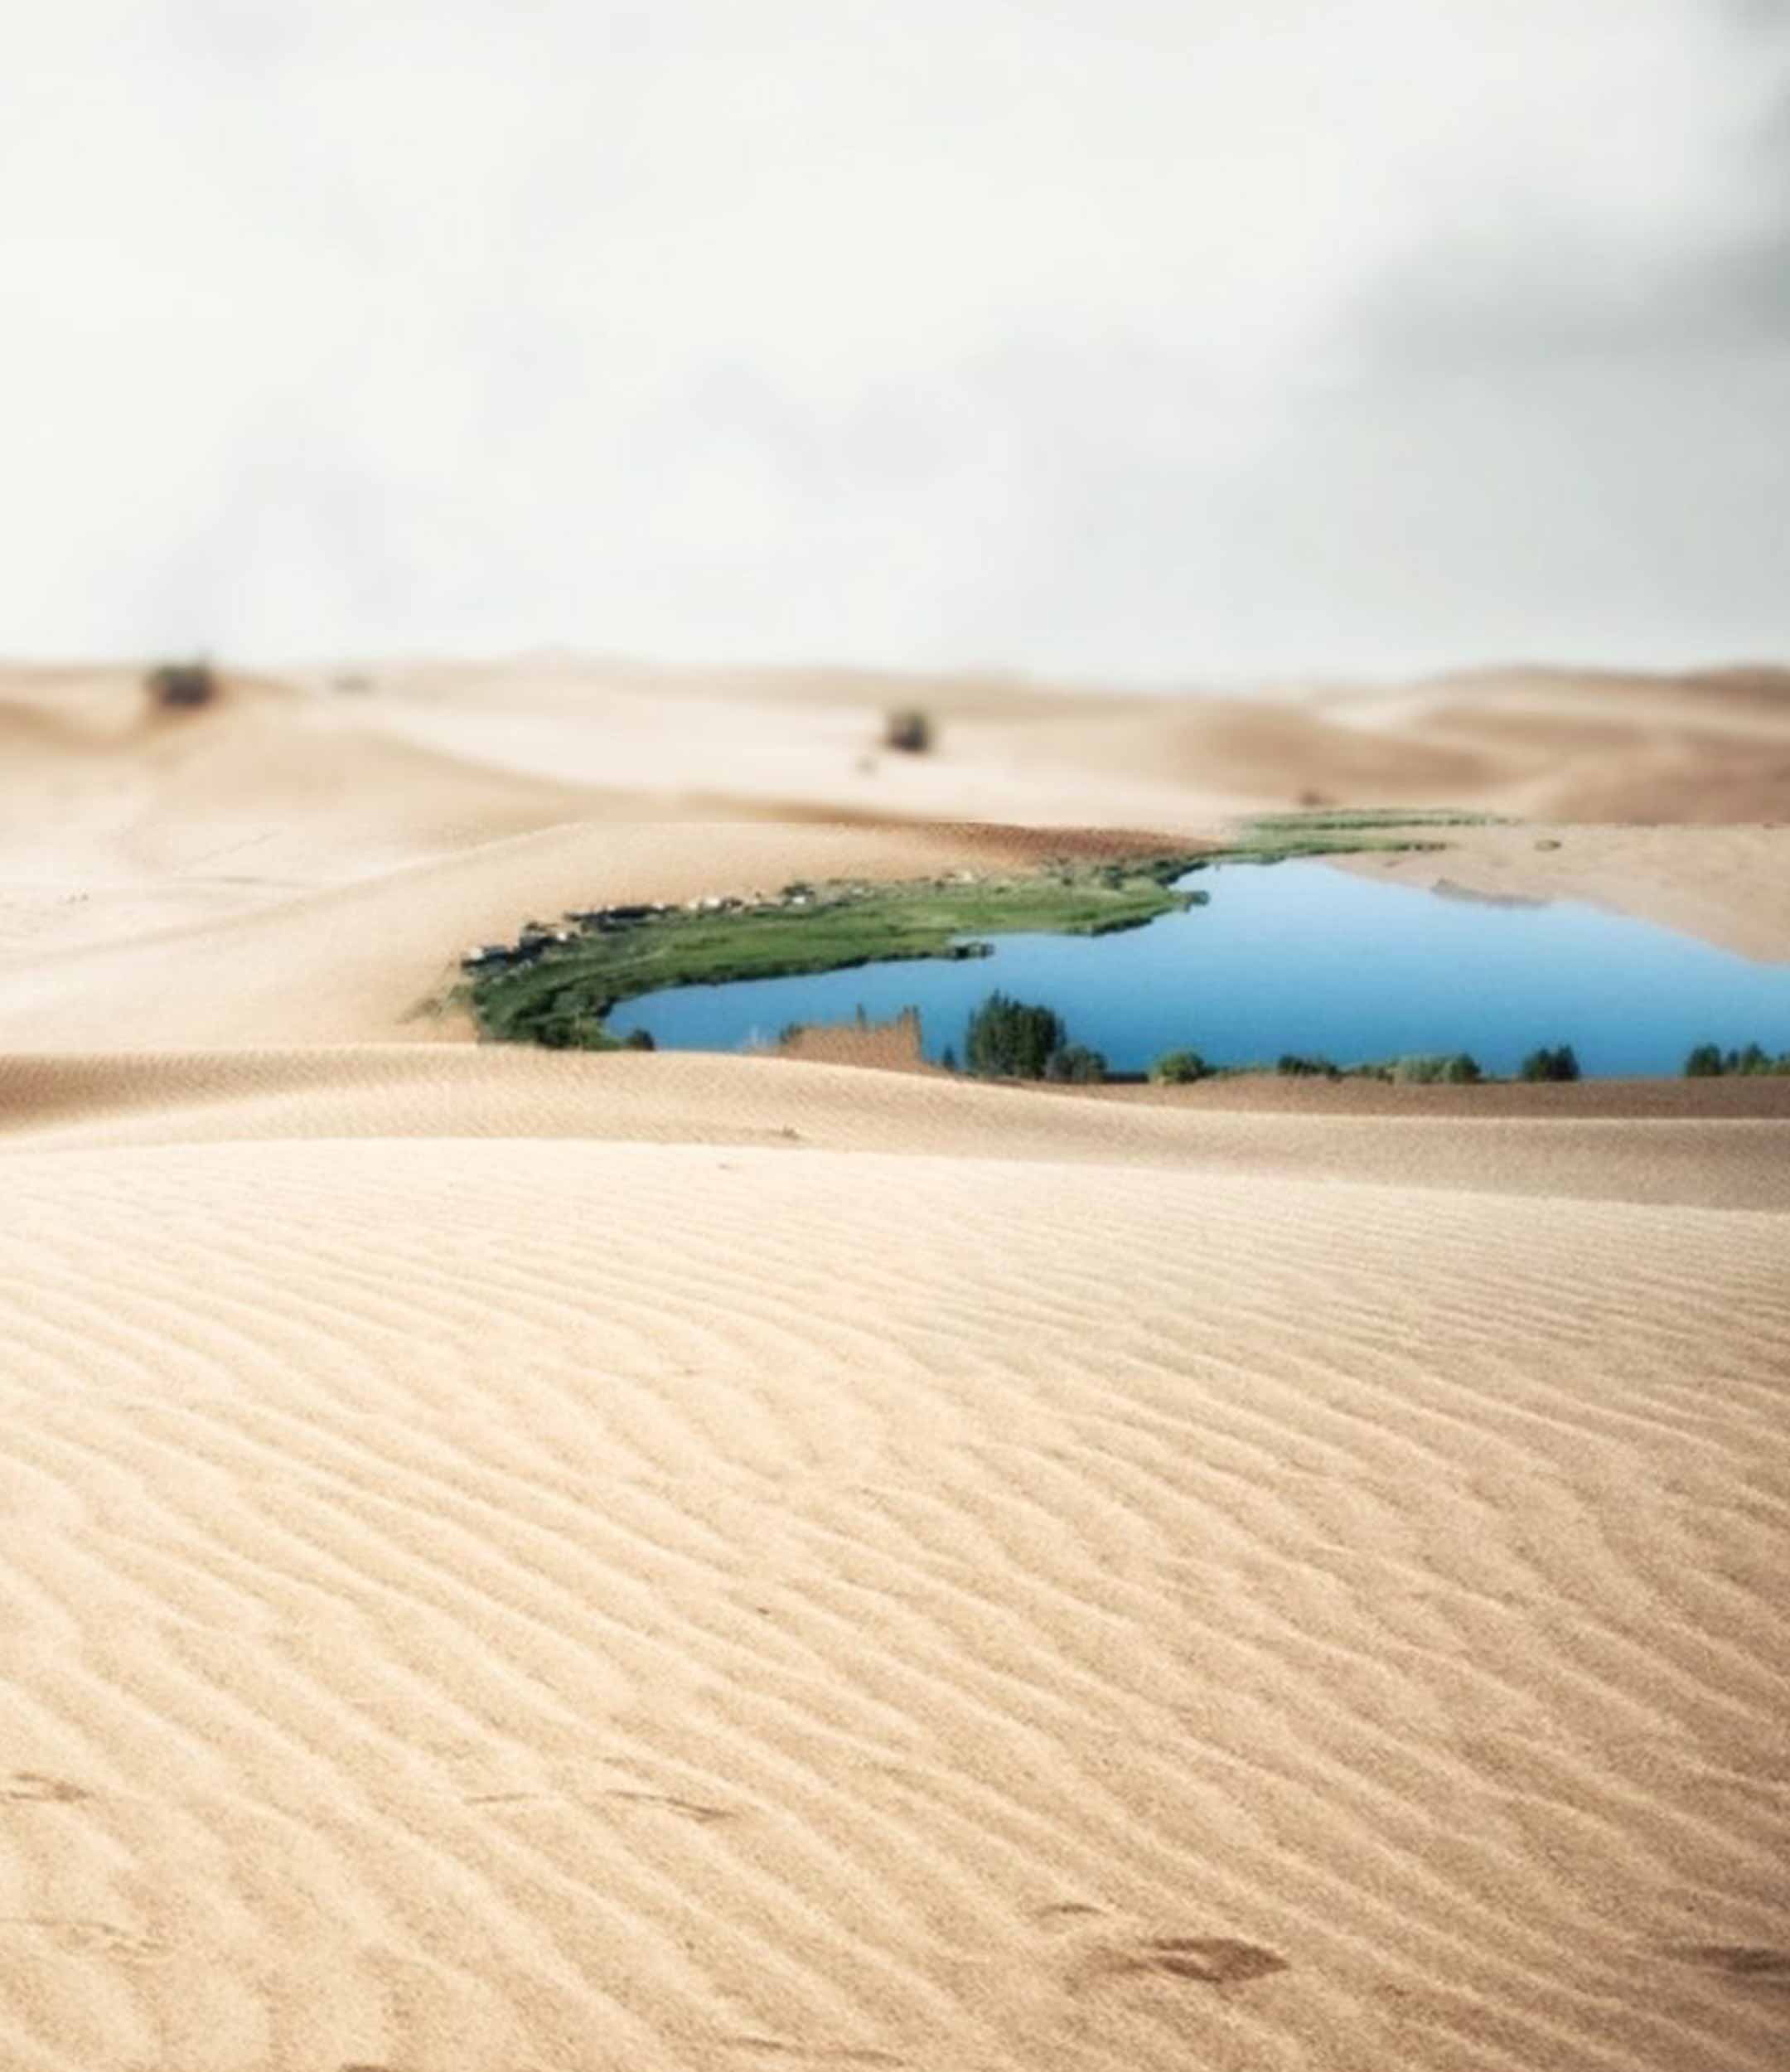 Pond Between Desert Photo Editing Background Free Stock Image